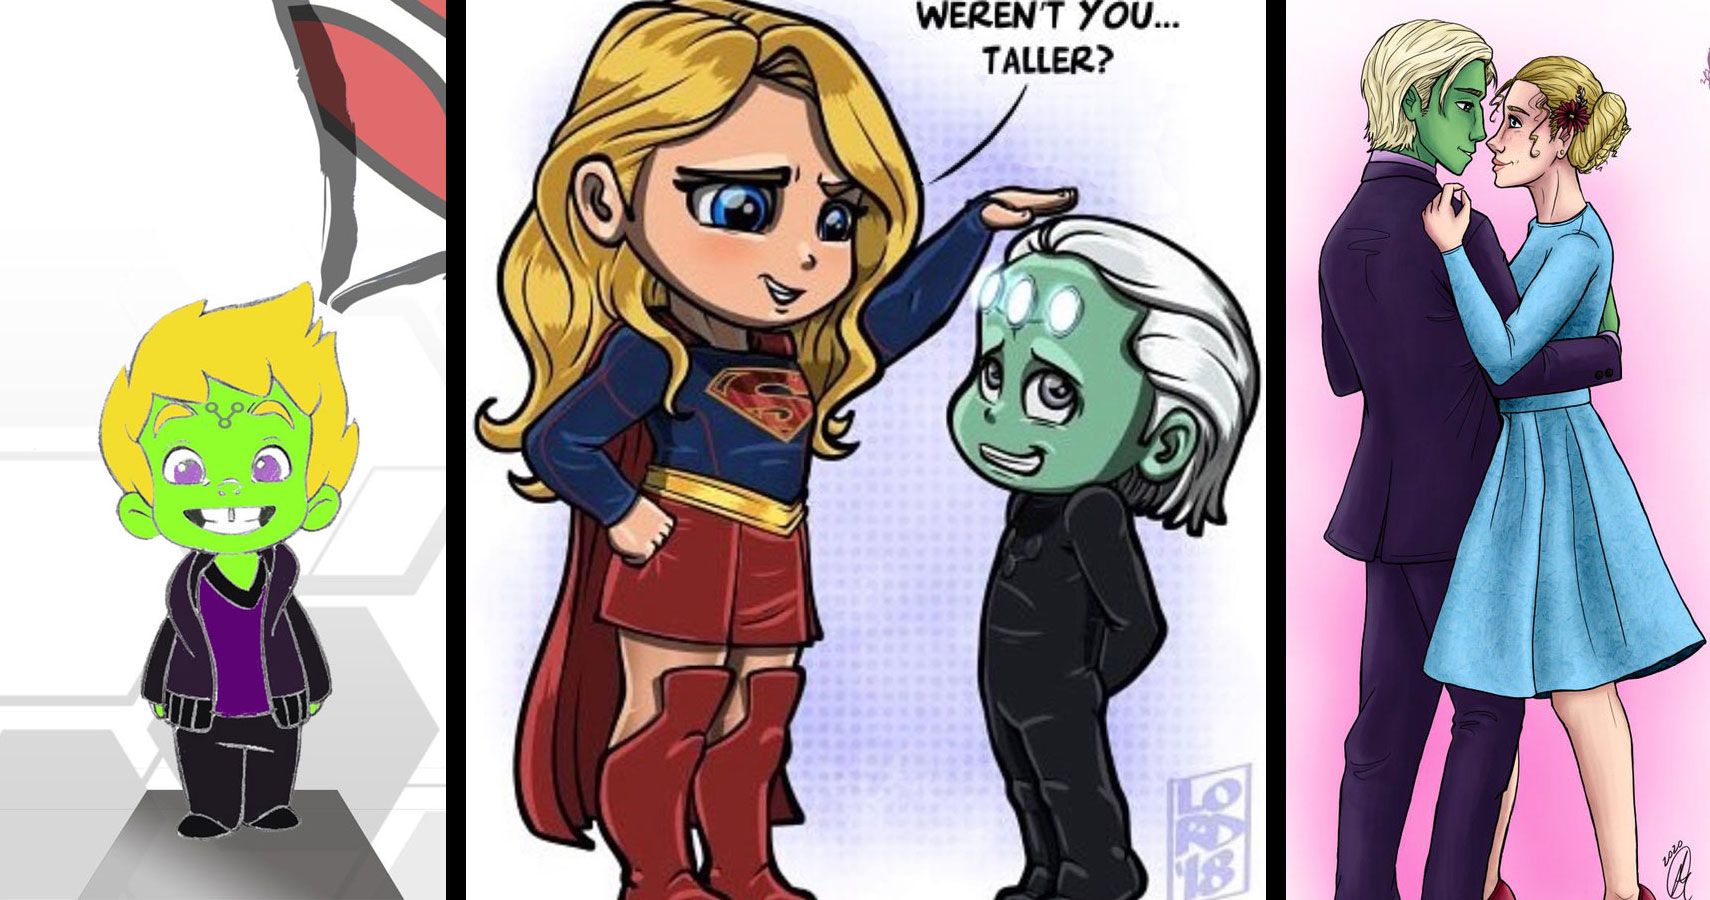 Fan Art of Supergirl and Brainiac 5